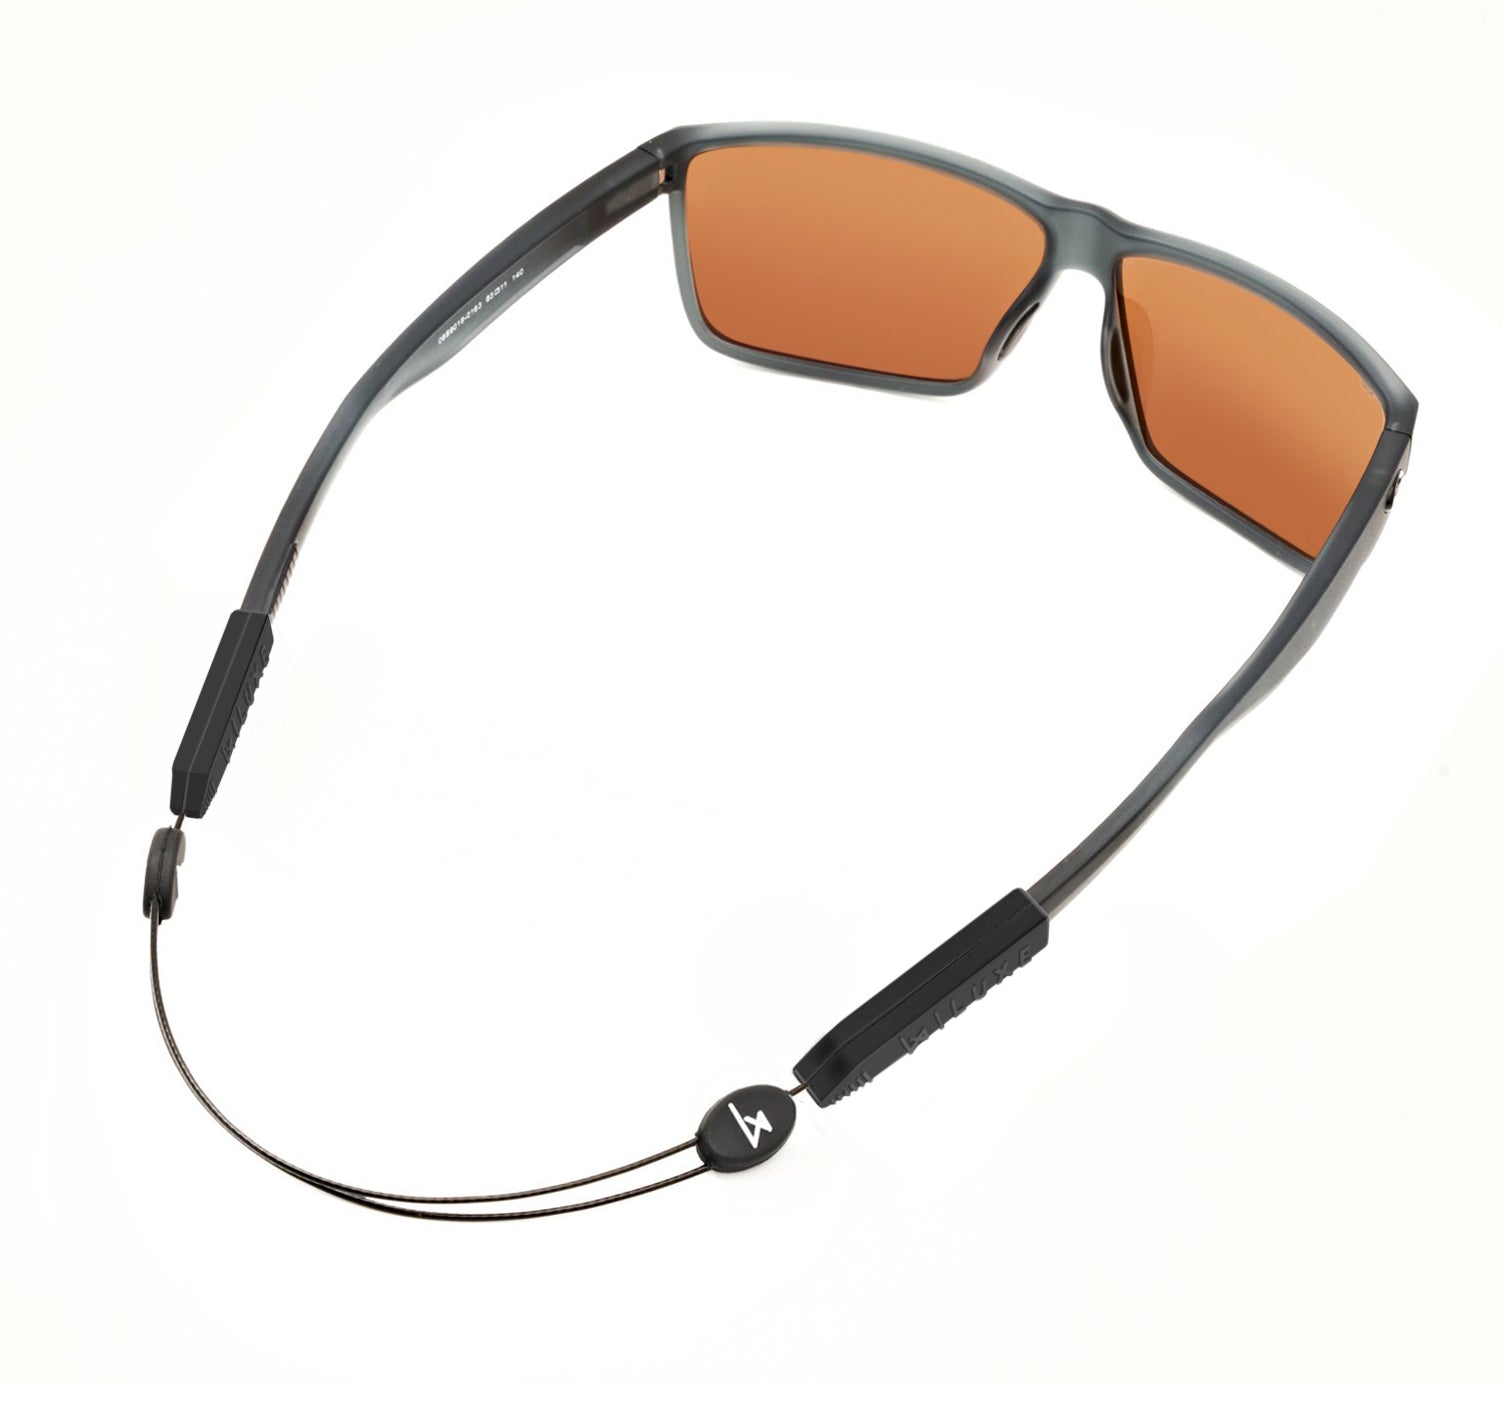 Luxe Performance Eyewear Strap: Premium Adjustable Sunglasses Strap